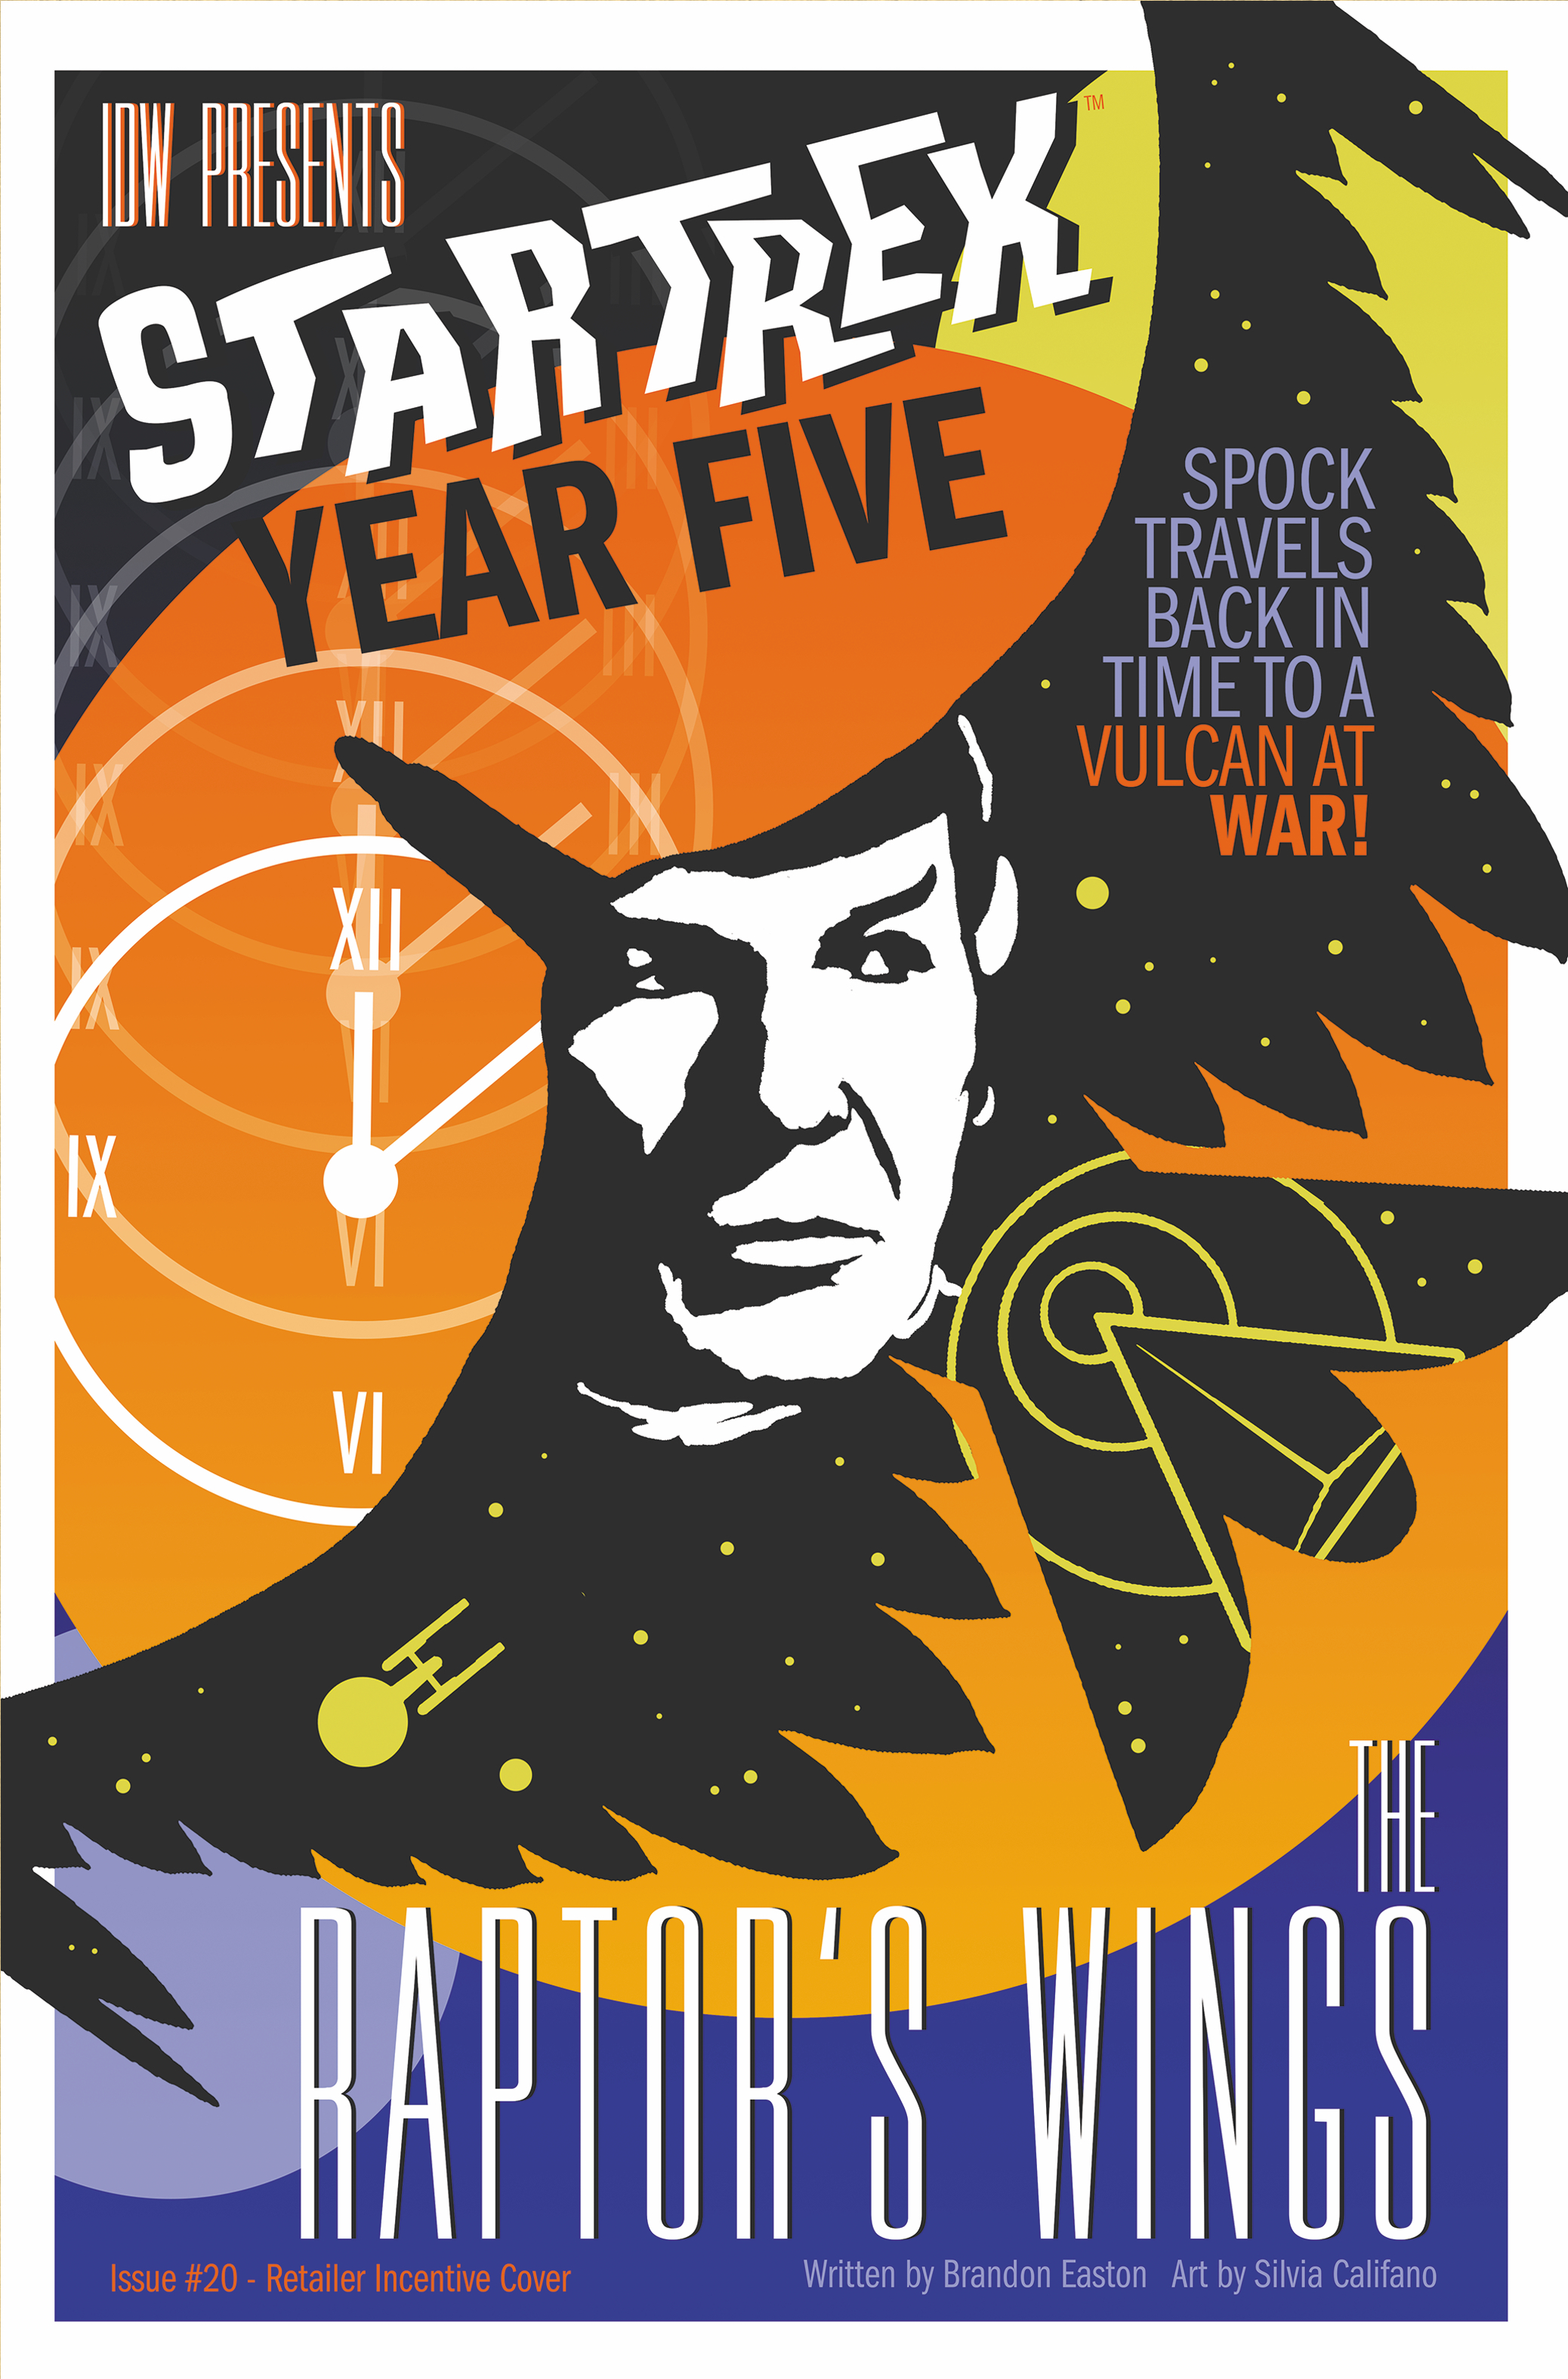 Star Trek Year Five #20 1 for 10 Incentive Lendl